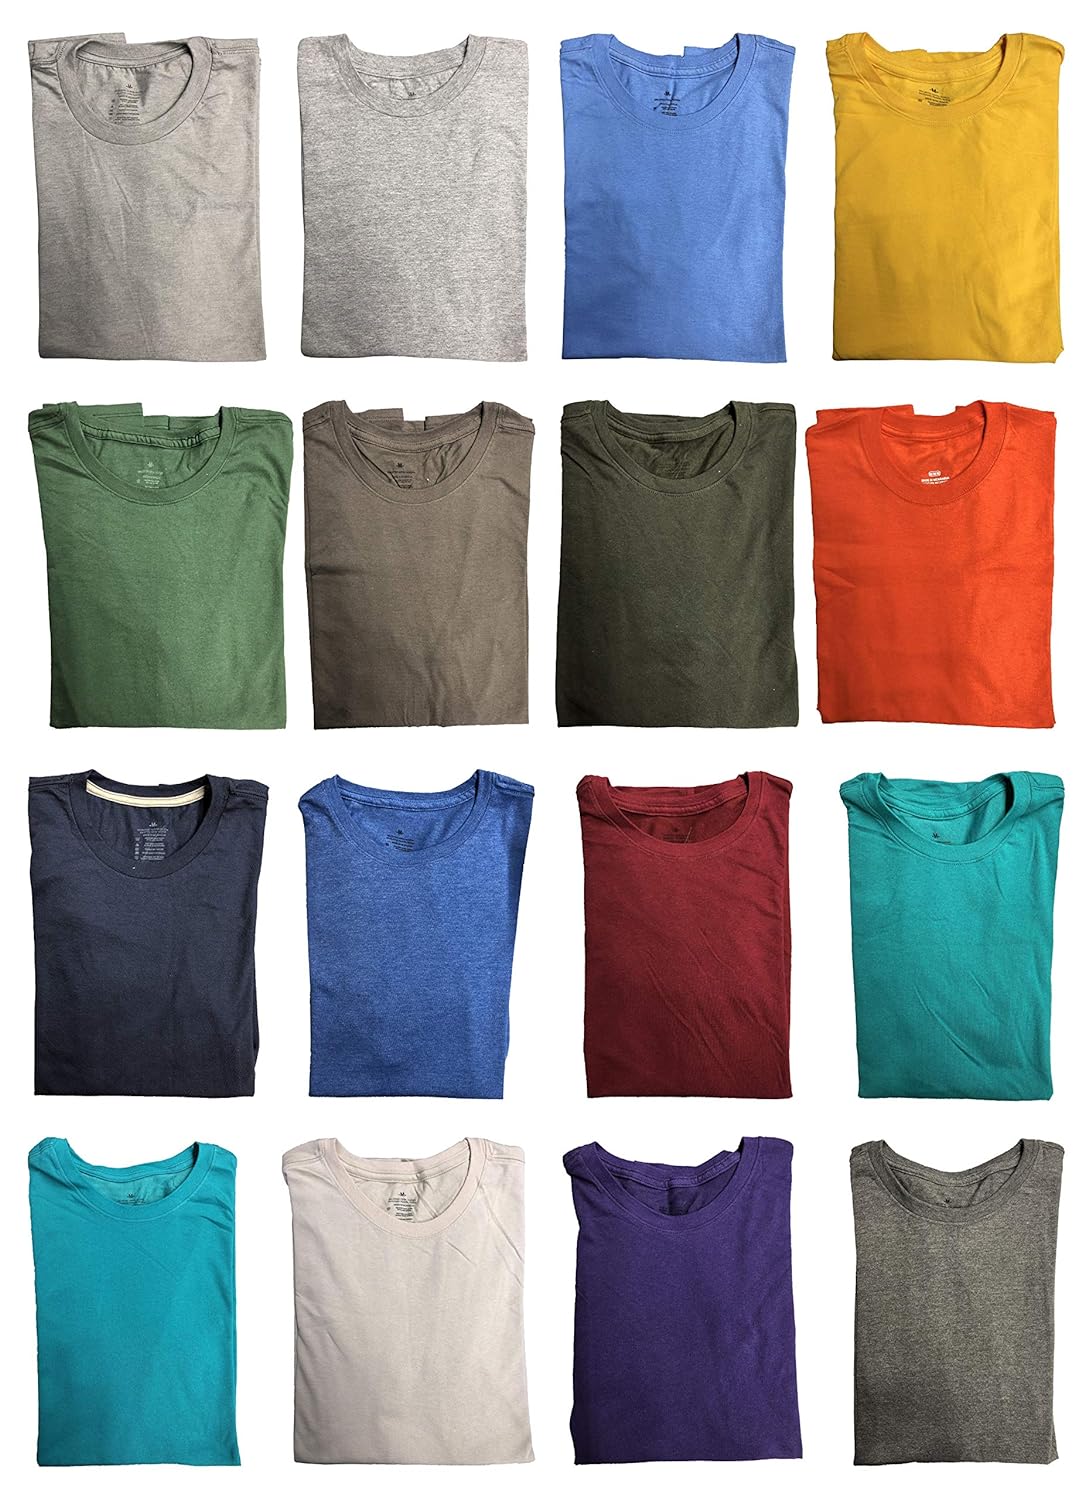 SOCKS'NBULK Mens Cotton Crew Neck Short Sleeve T-Shirts Mix Colors Bulk Pack Value Deal (120 PK)